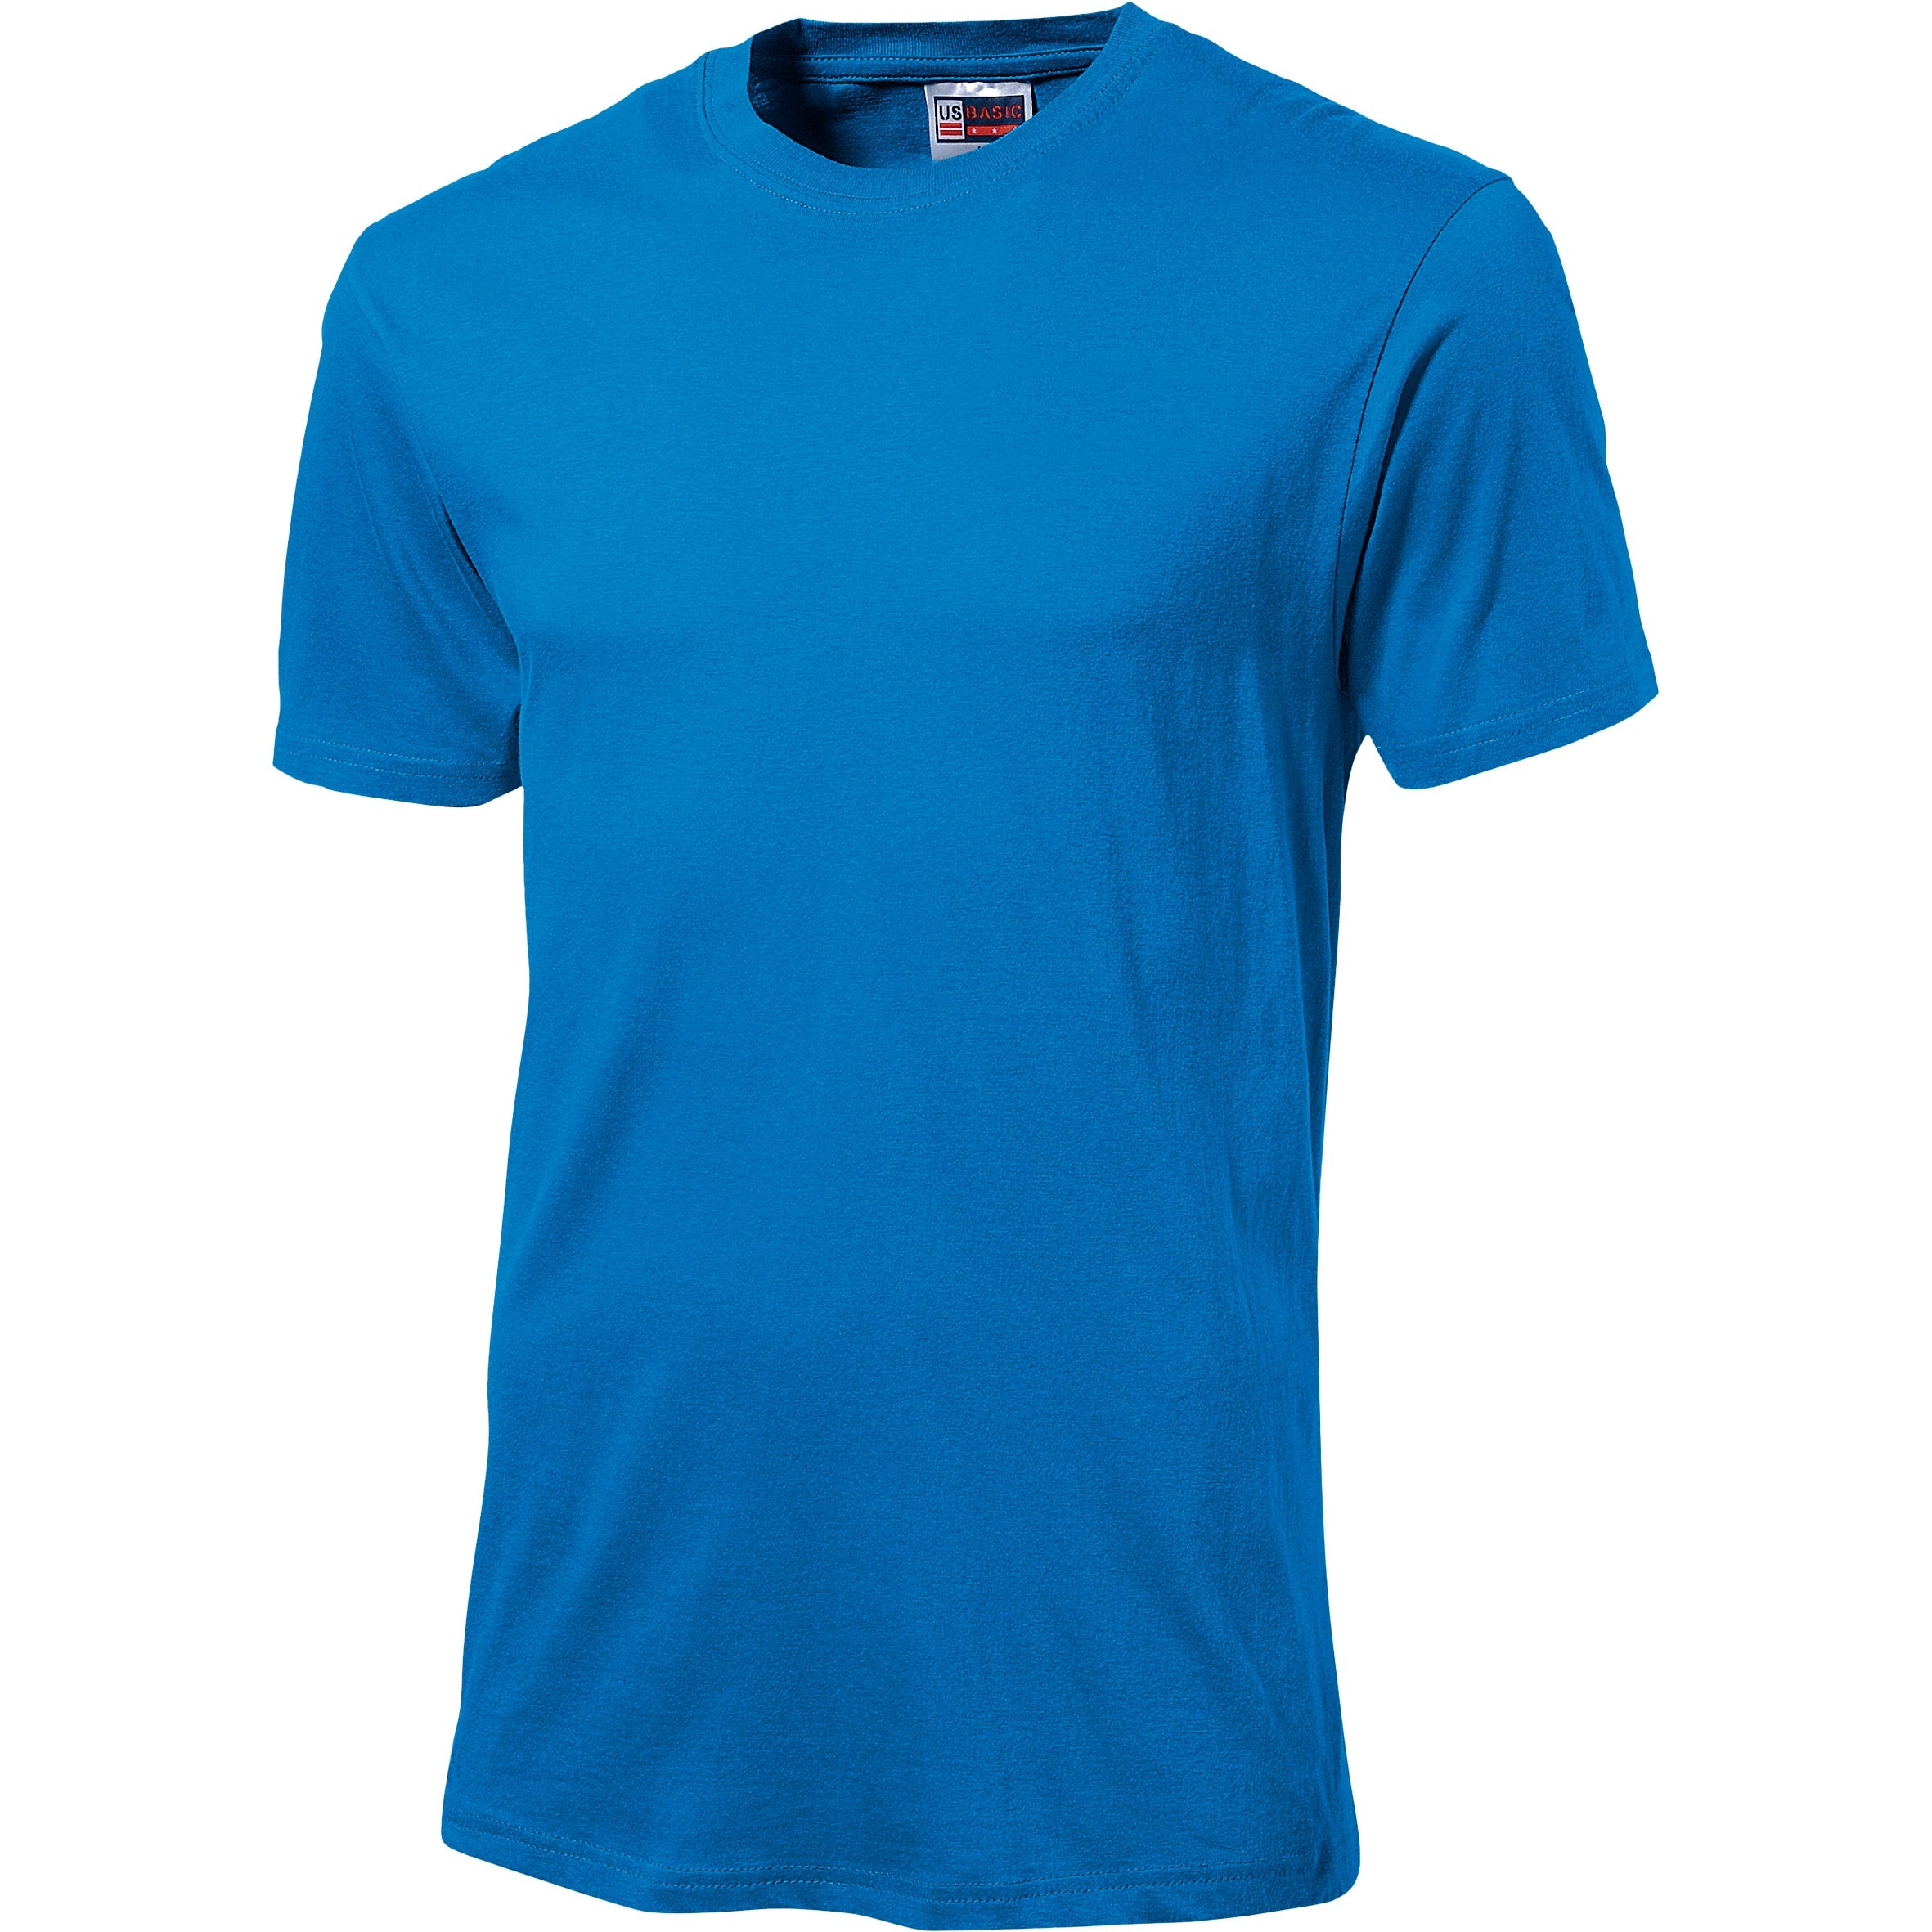 Unisex Super Club 135 T-Shirt L / Sky Blue / SB